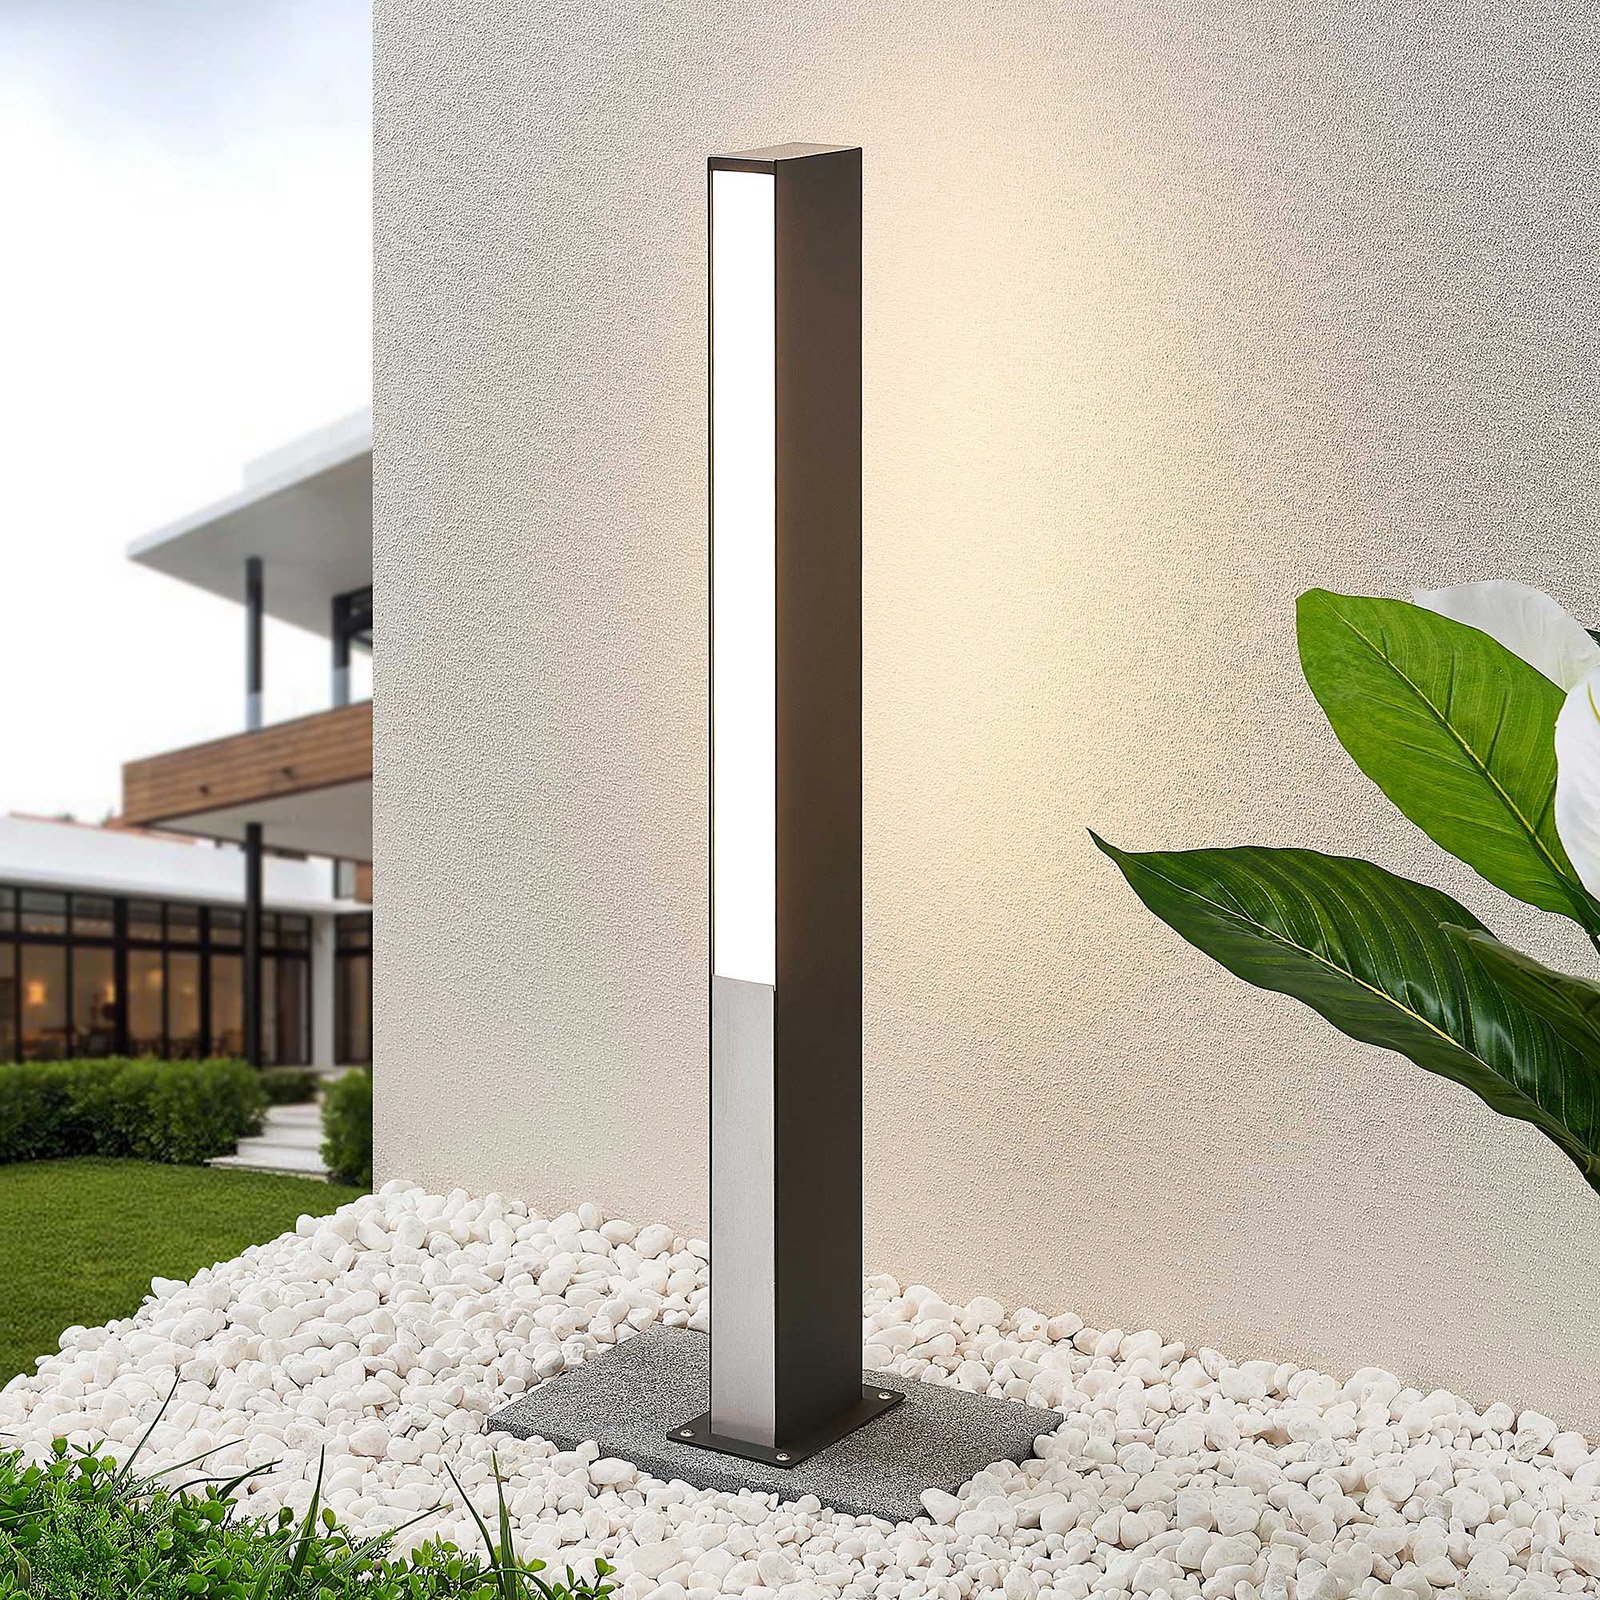 Lucande Aegisa chodníkové LED svietidlo, 80 cm